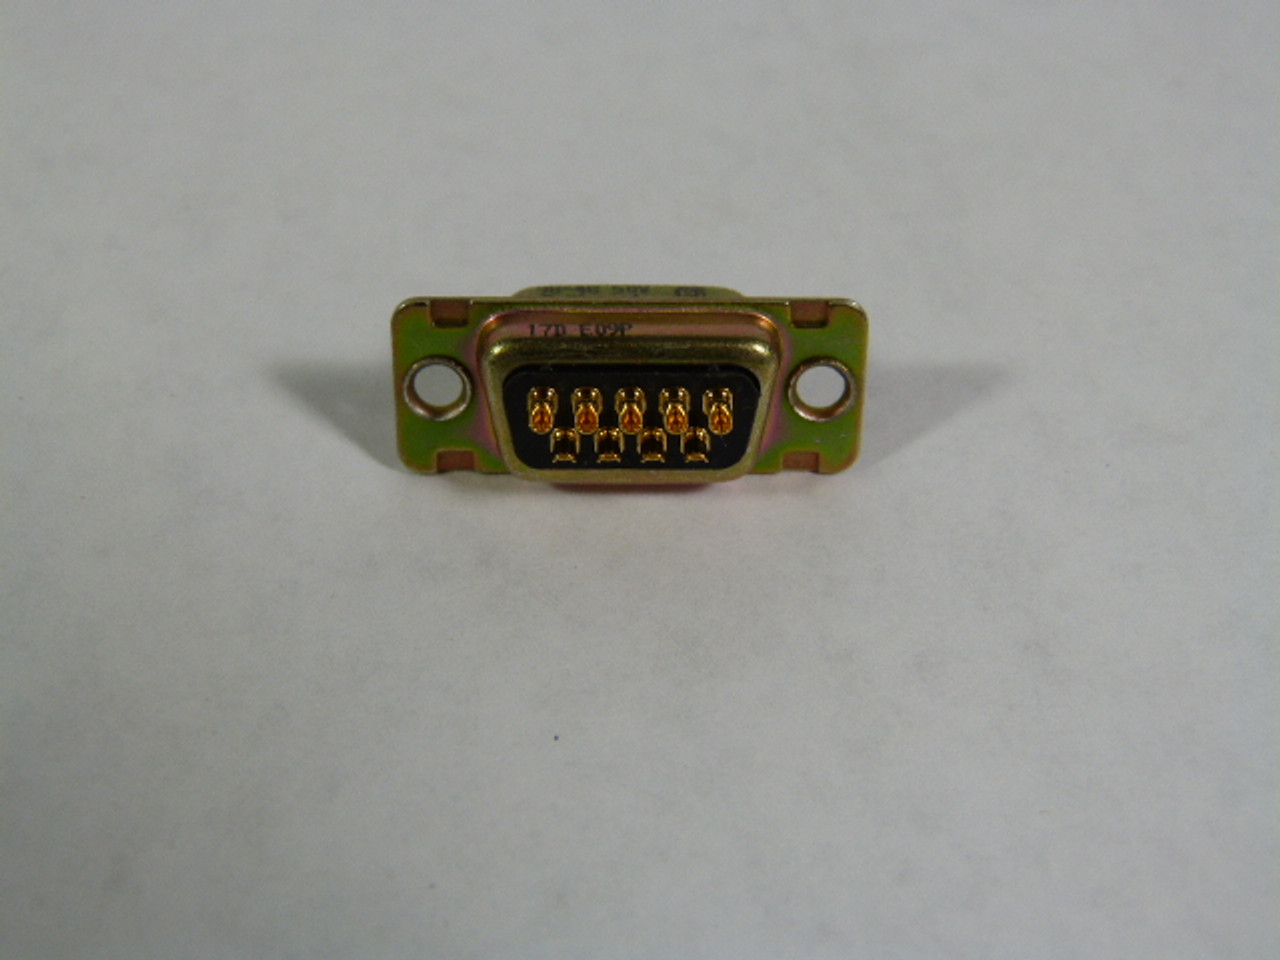 Amphenol 17D-E09P Connector Male 9 PIN D-Sub USED